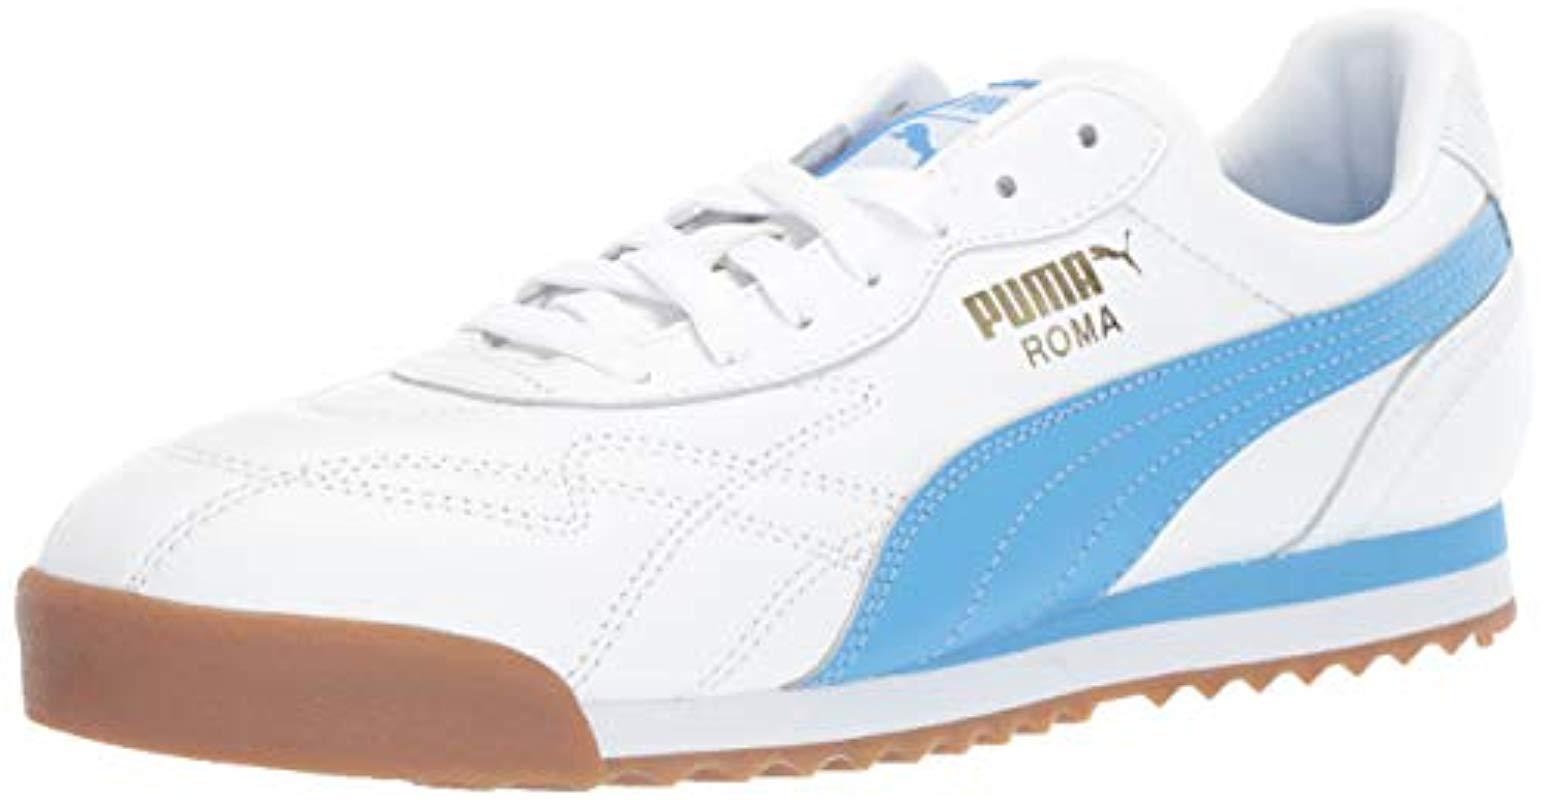 puma roma blue and white